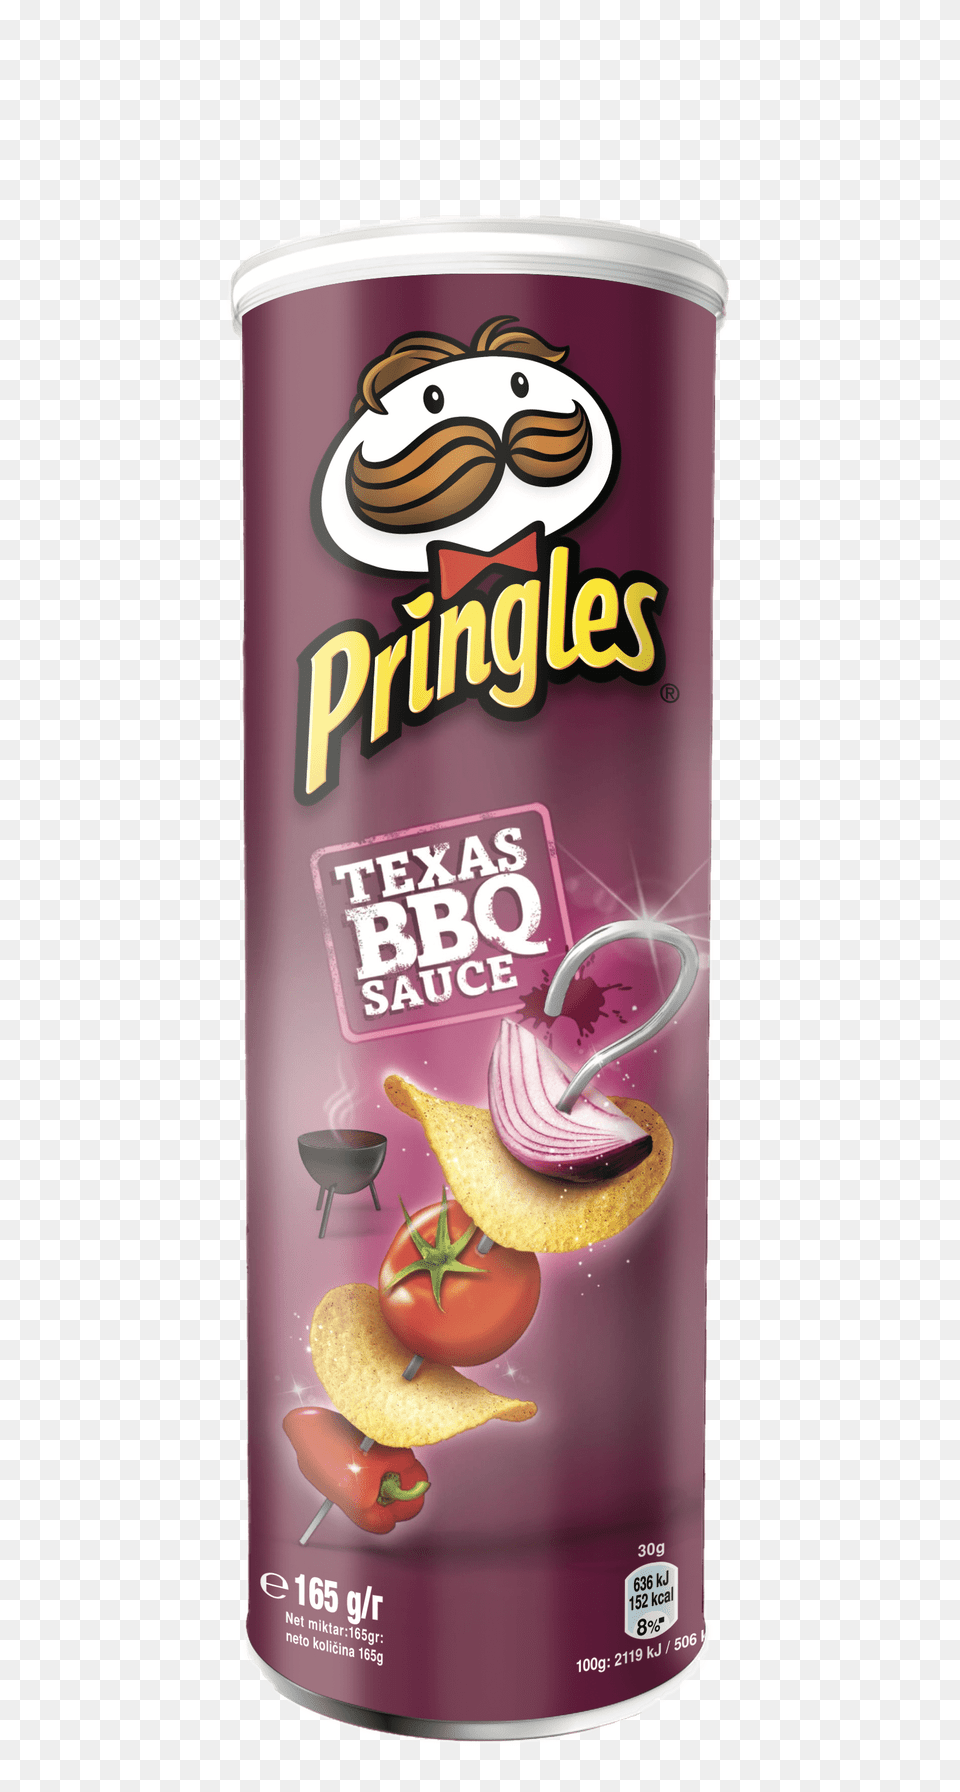 Pringles Texas Bbq Sauce, Tin, Can Png Image